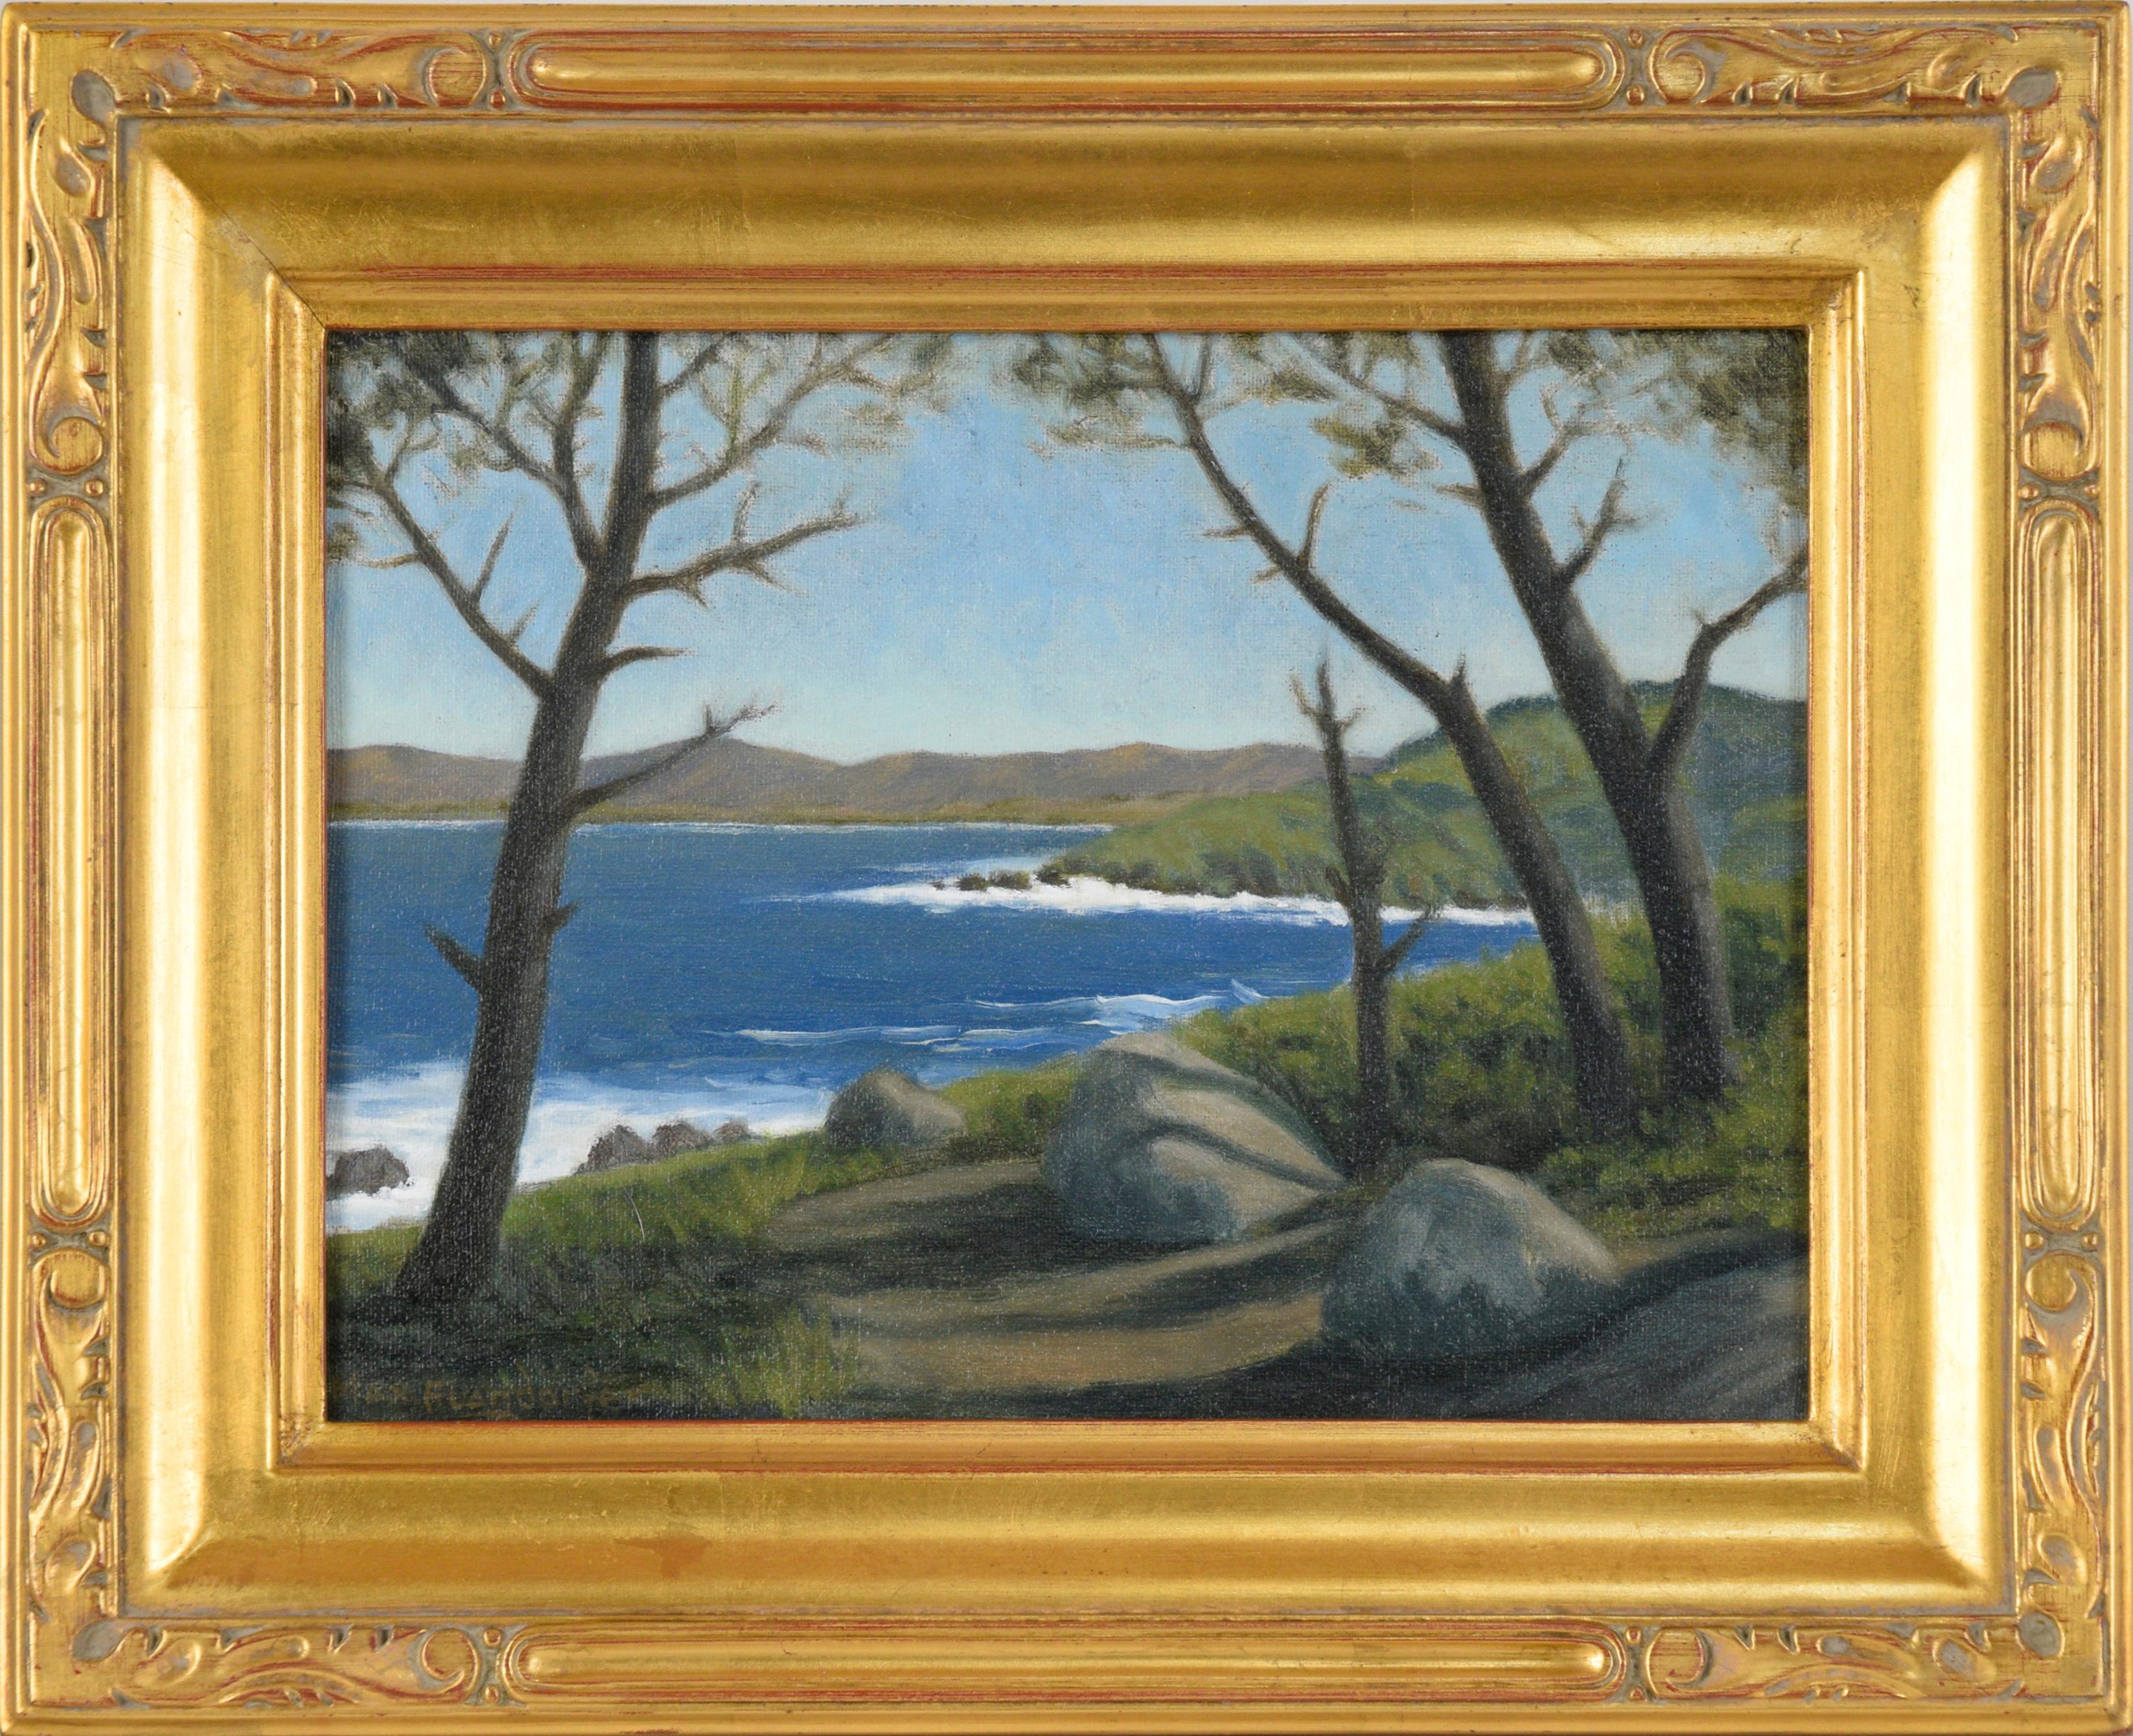 Max Flandorfer Landscape Painting - "Sunset Pt. Lobos, CA" Coastal Landscape in Oil on Linen